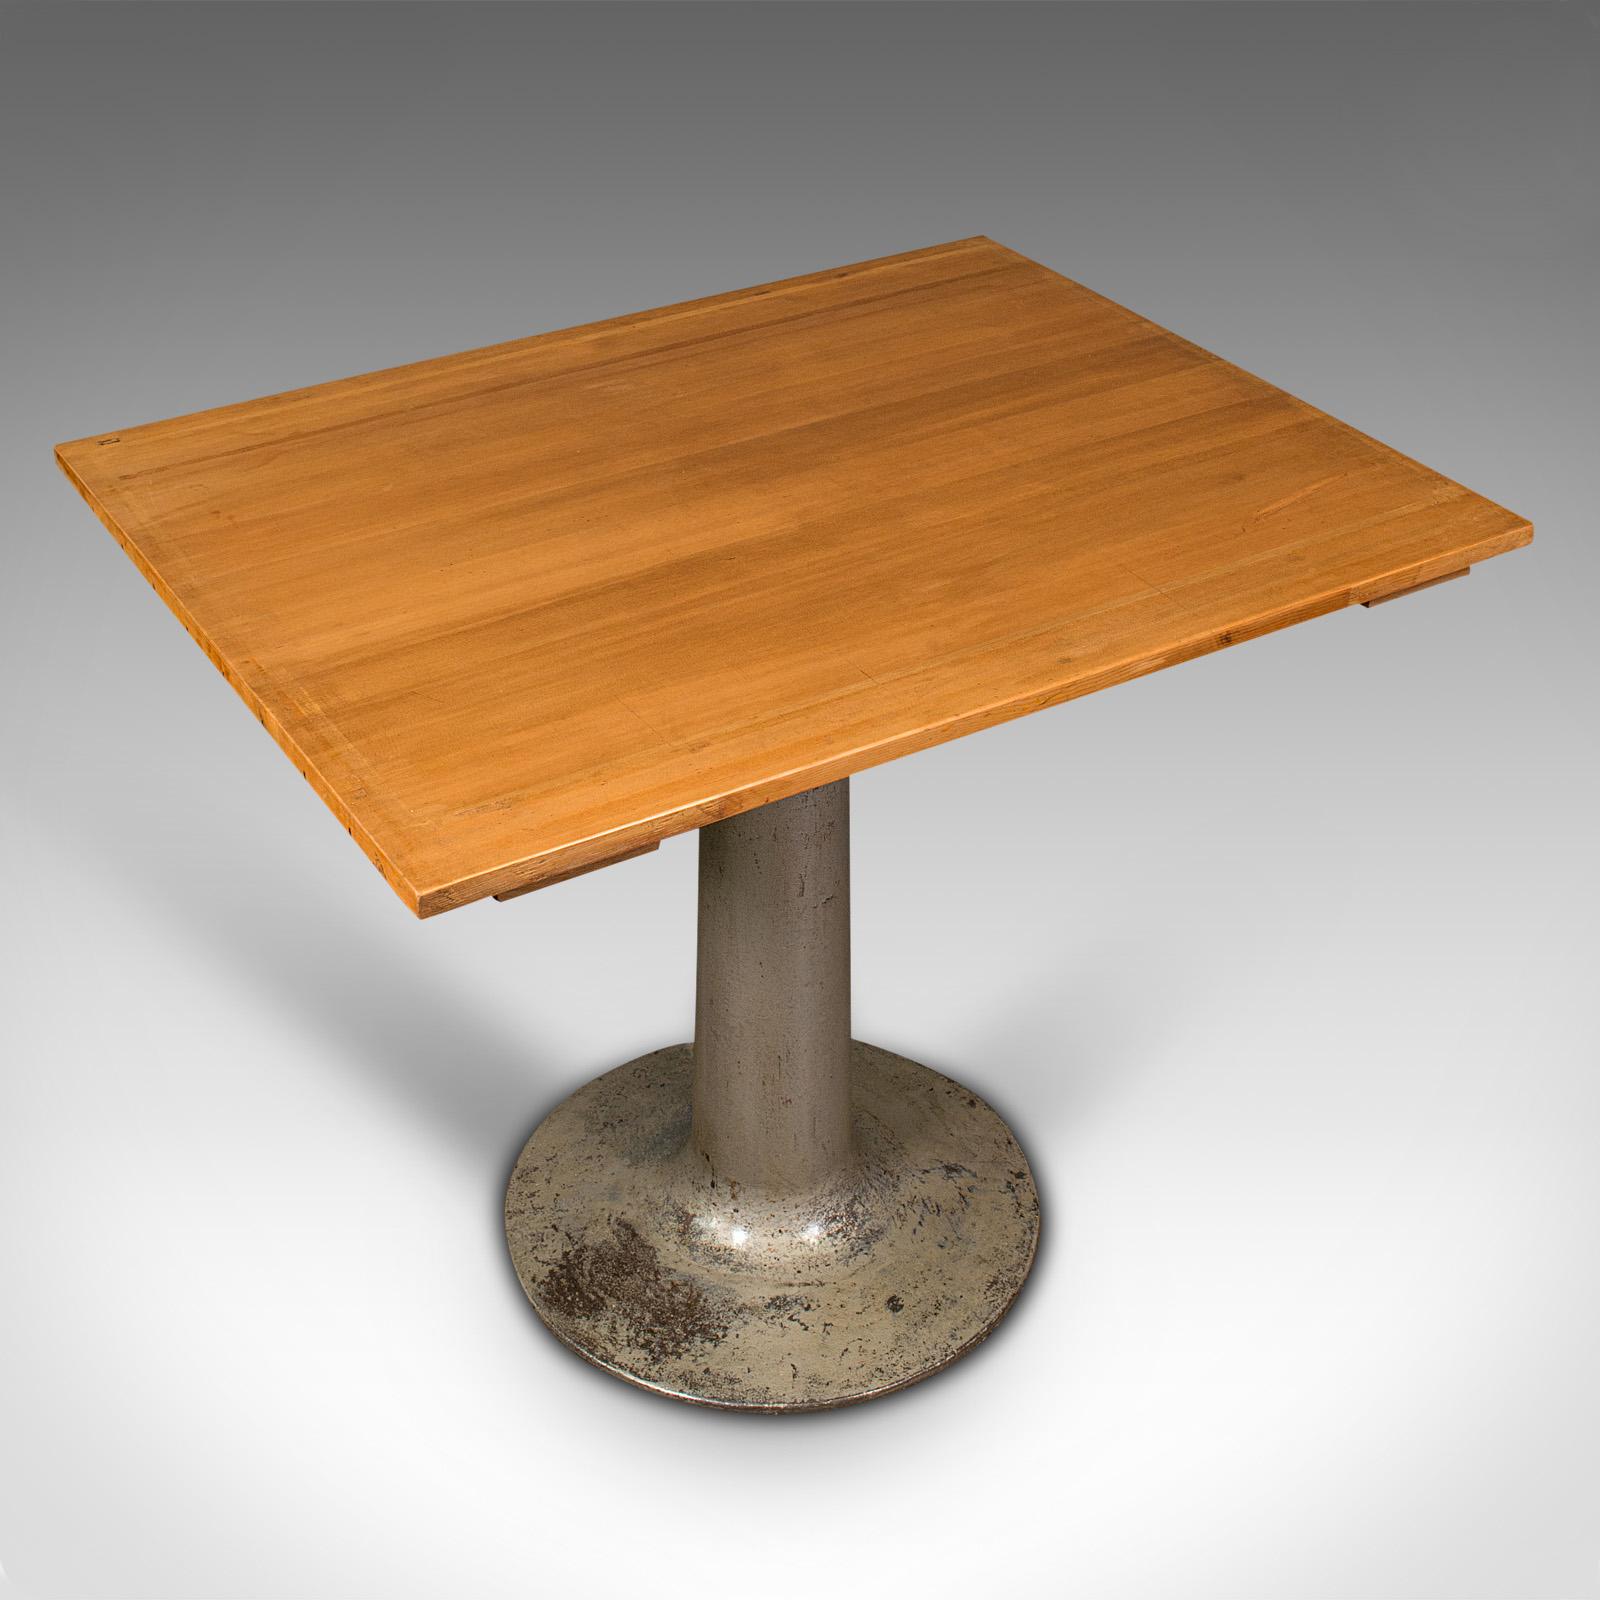 Vintage Pedestal Table, English, Beech, Pine, Kitchen, Desk, Mid Century, C.1950 For Sale 1